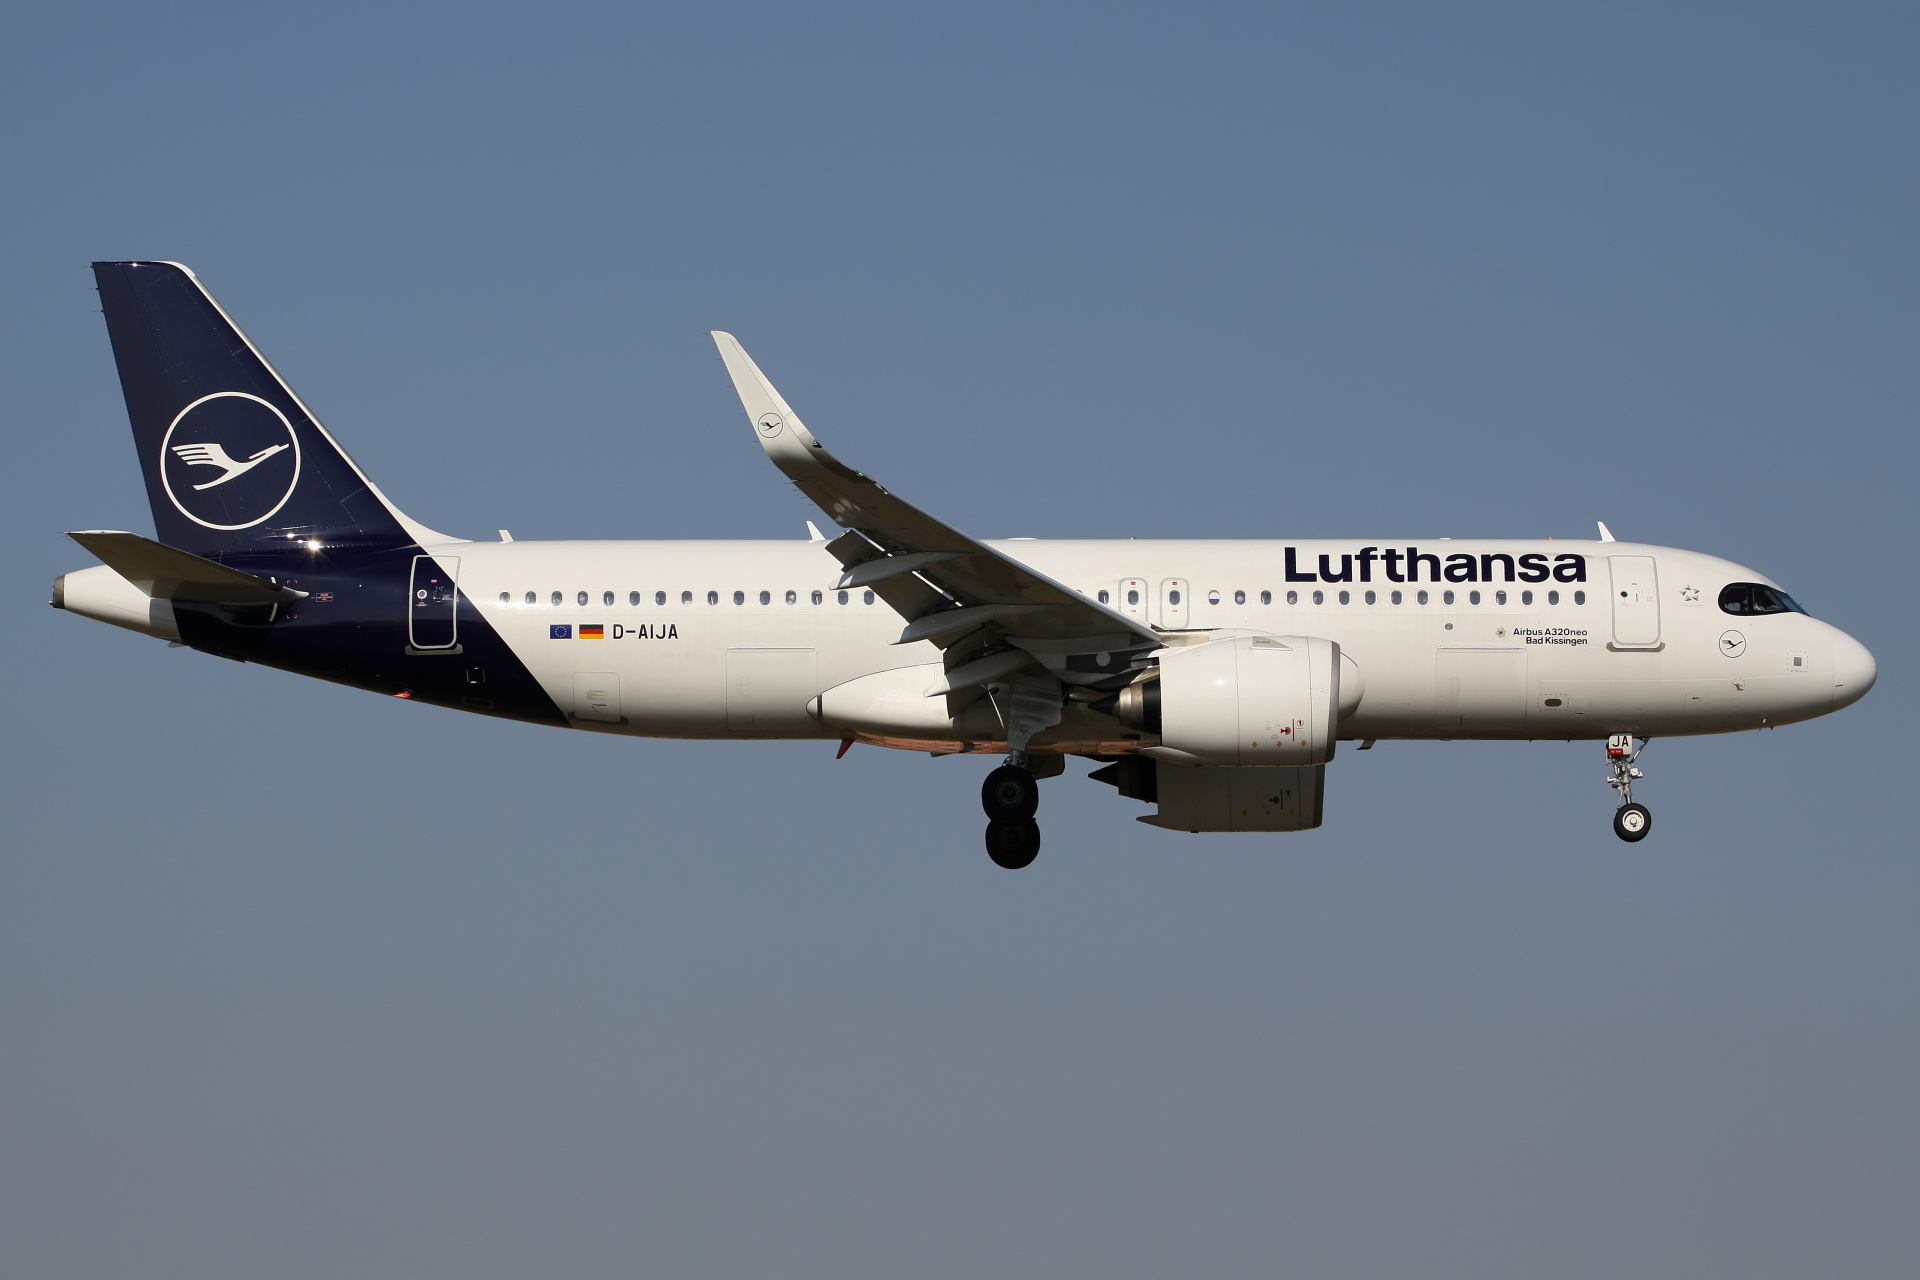 D-AIJA (Aircraft » EPWA Spotting » Airbus A320neo » Lufthansa)